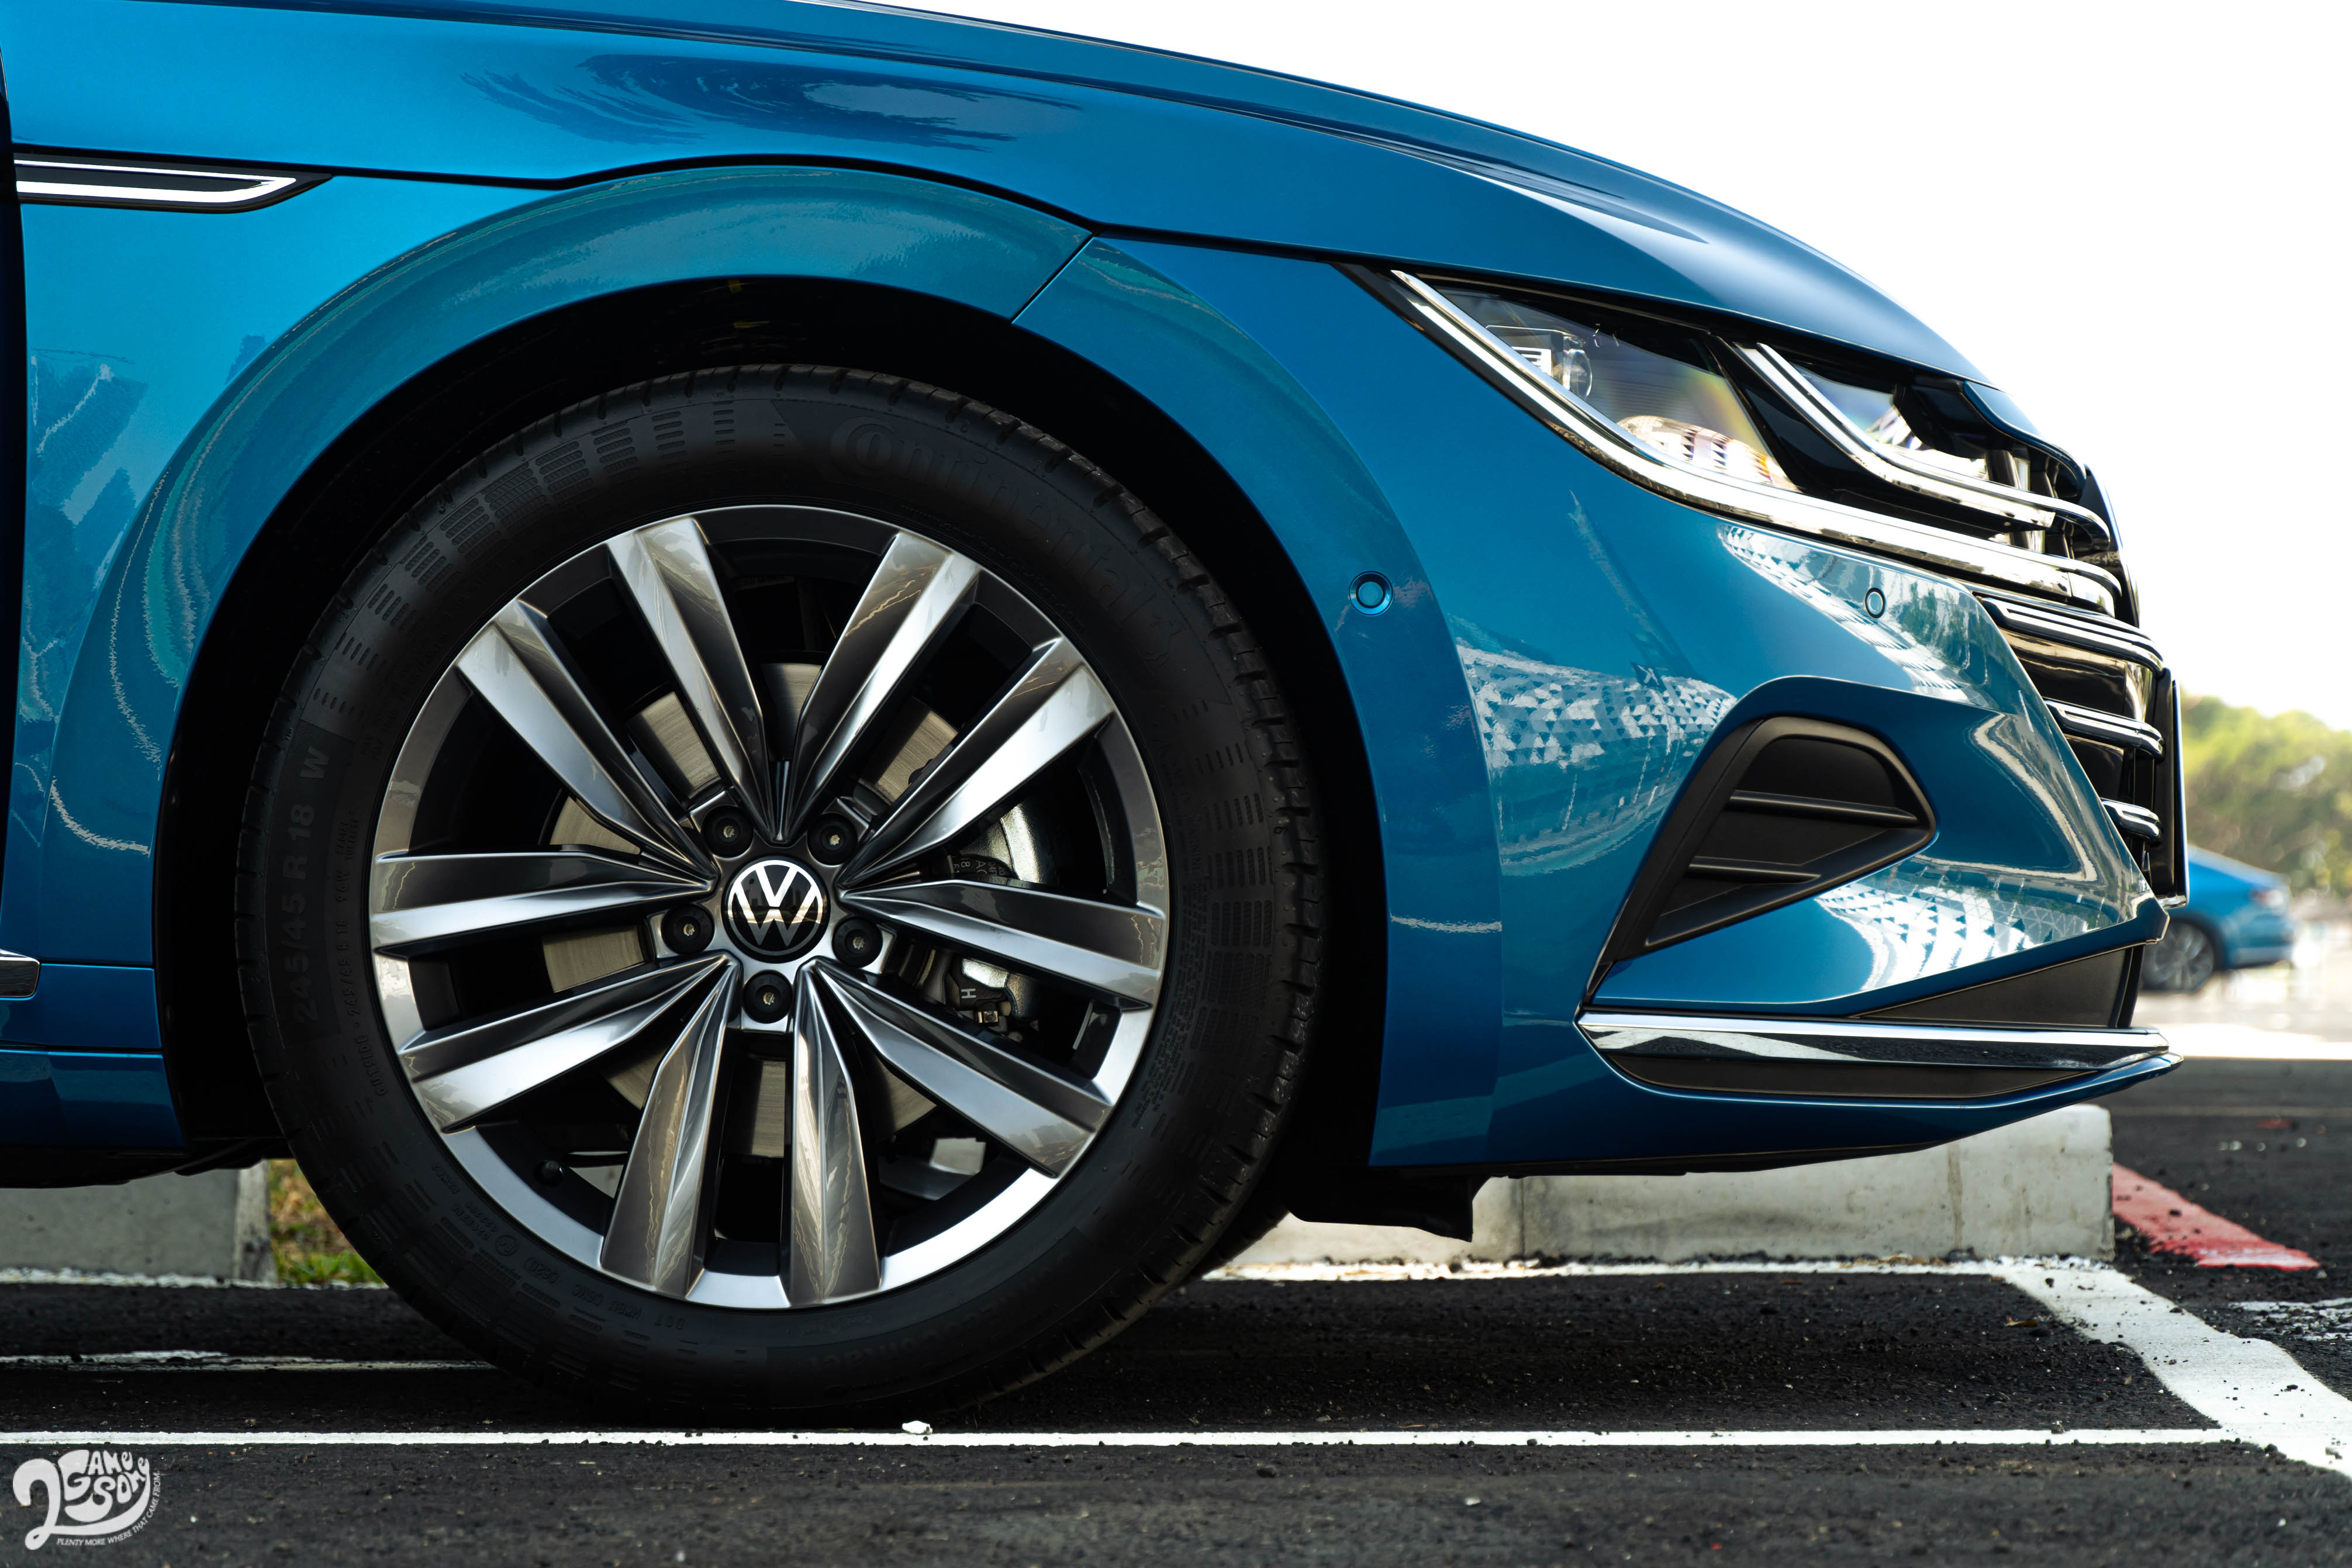 Elegance Premium 車型配備 18 吋輪圈，搭配 245/45R18 輪胎尺碼，並使用動態輪圈中心蓋，讓廠徽始終維持正向。